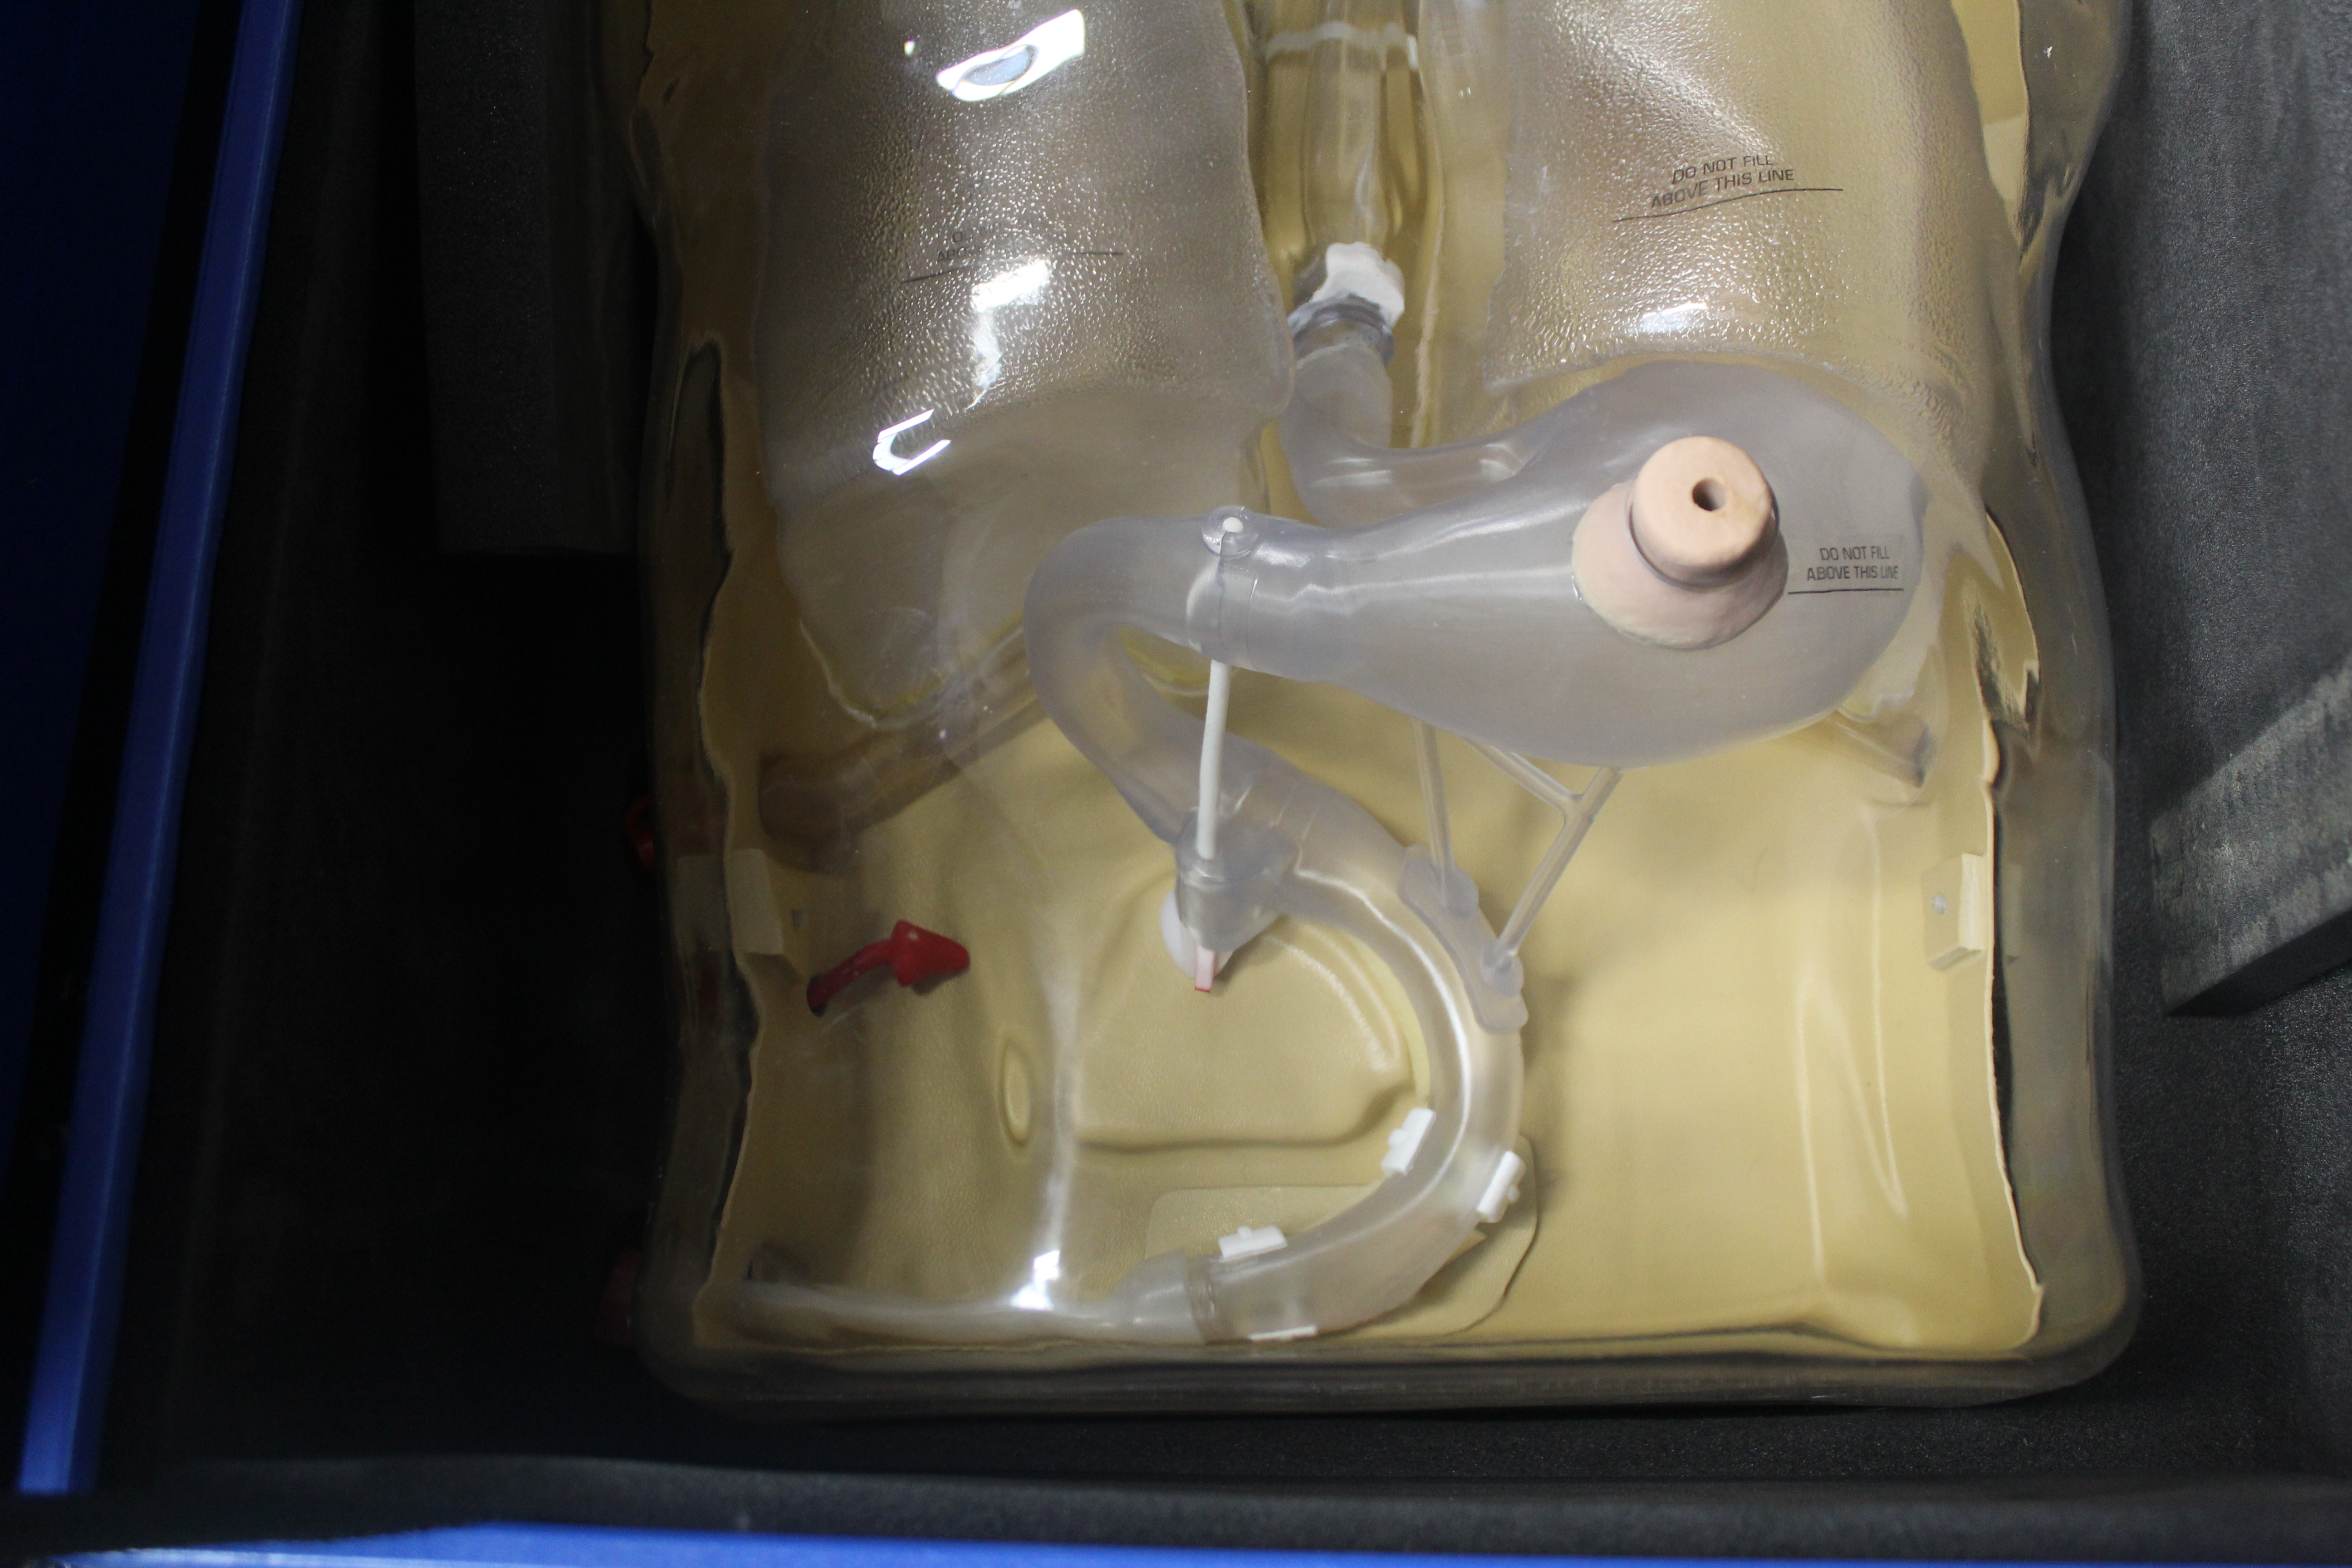 A Corman Naso-Gastric/Nasojejunal feeding simulato - Image 4 of 6